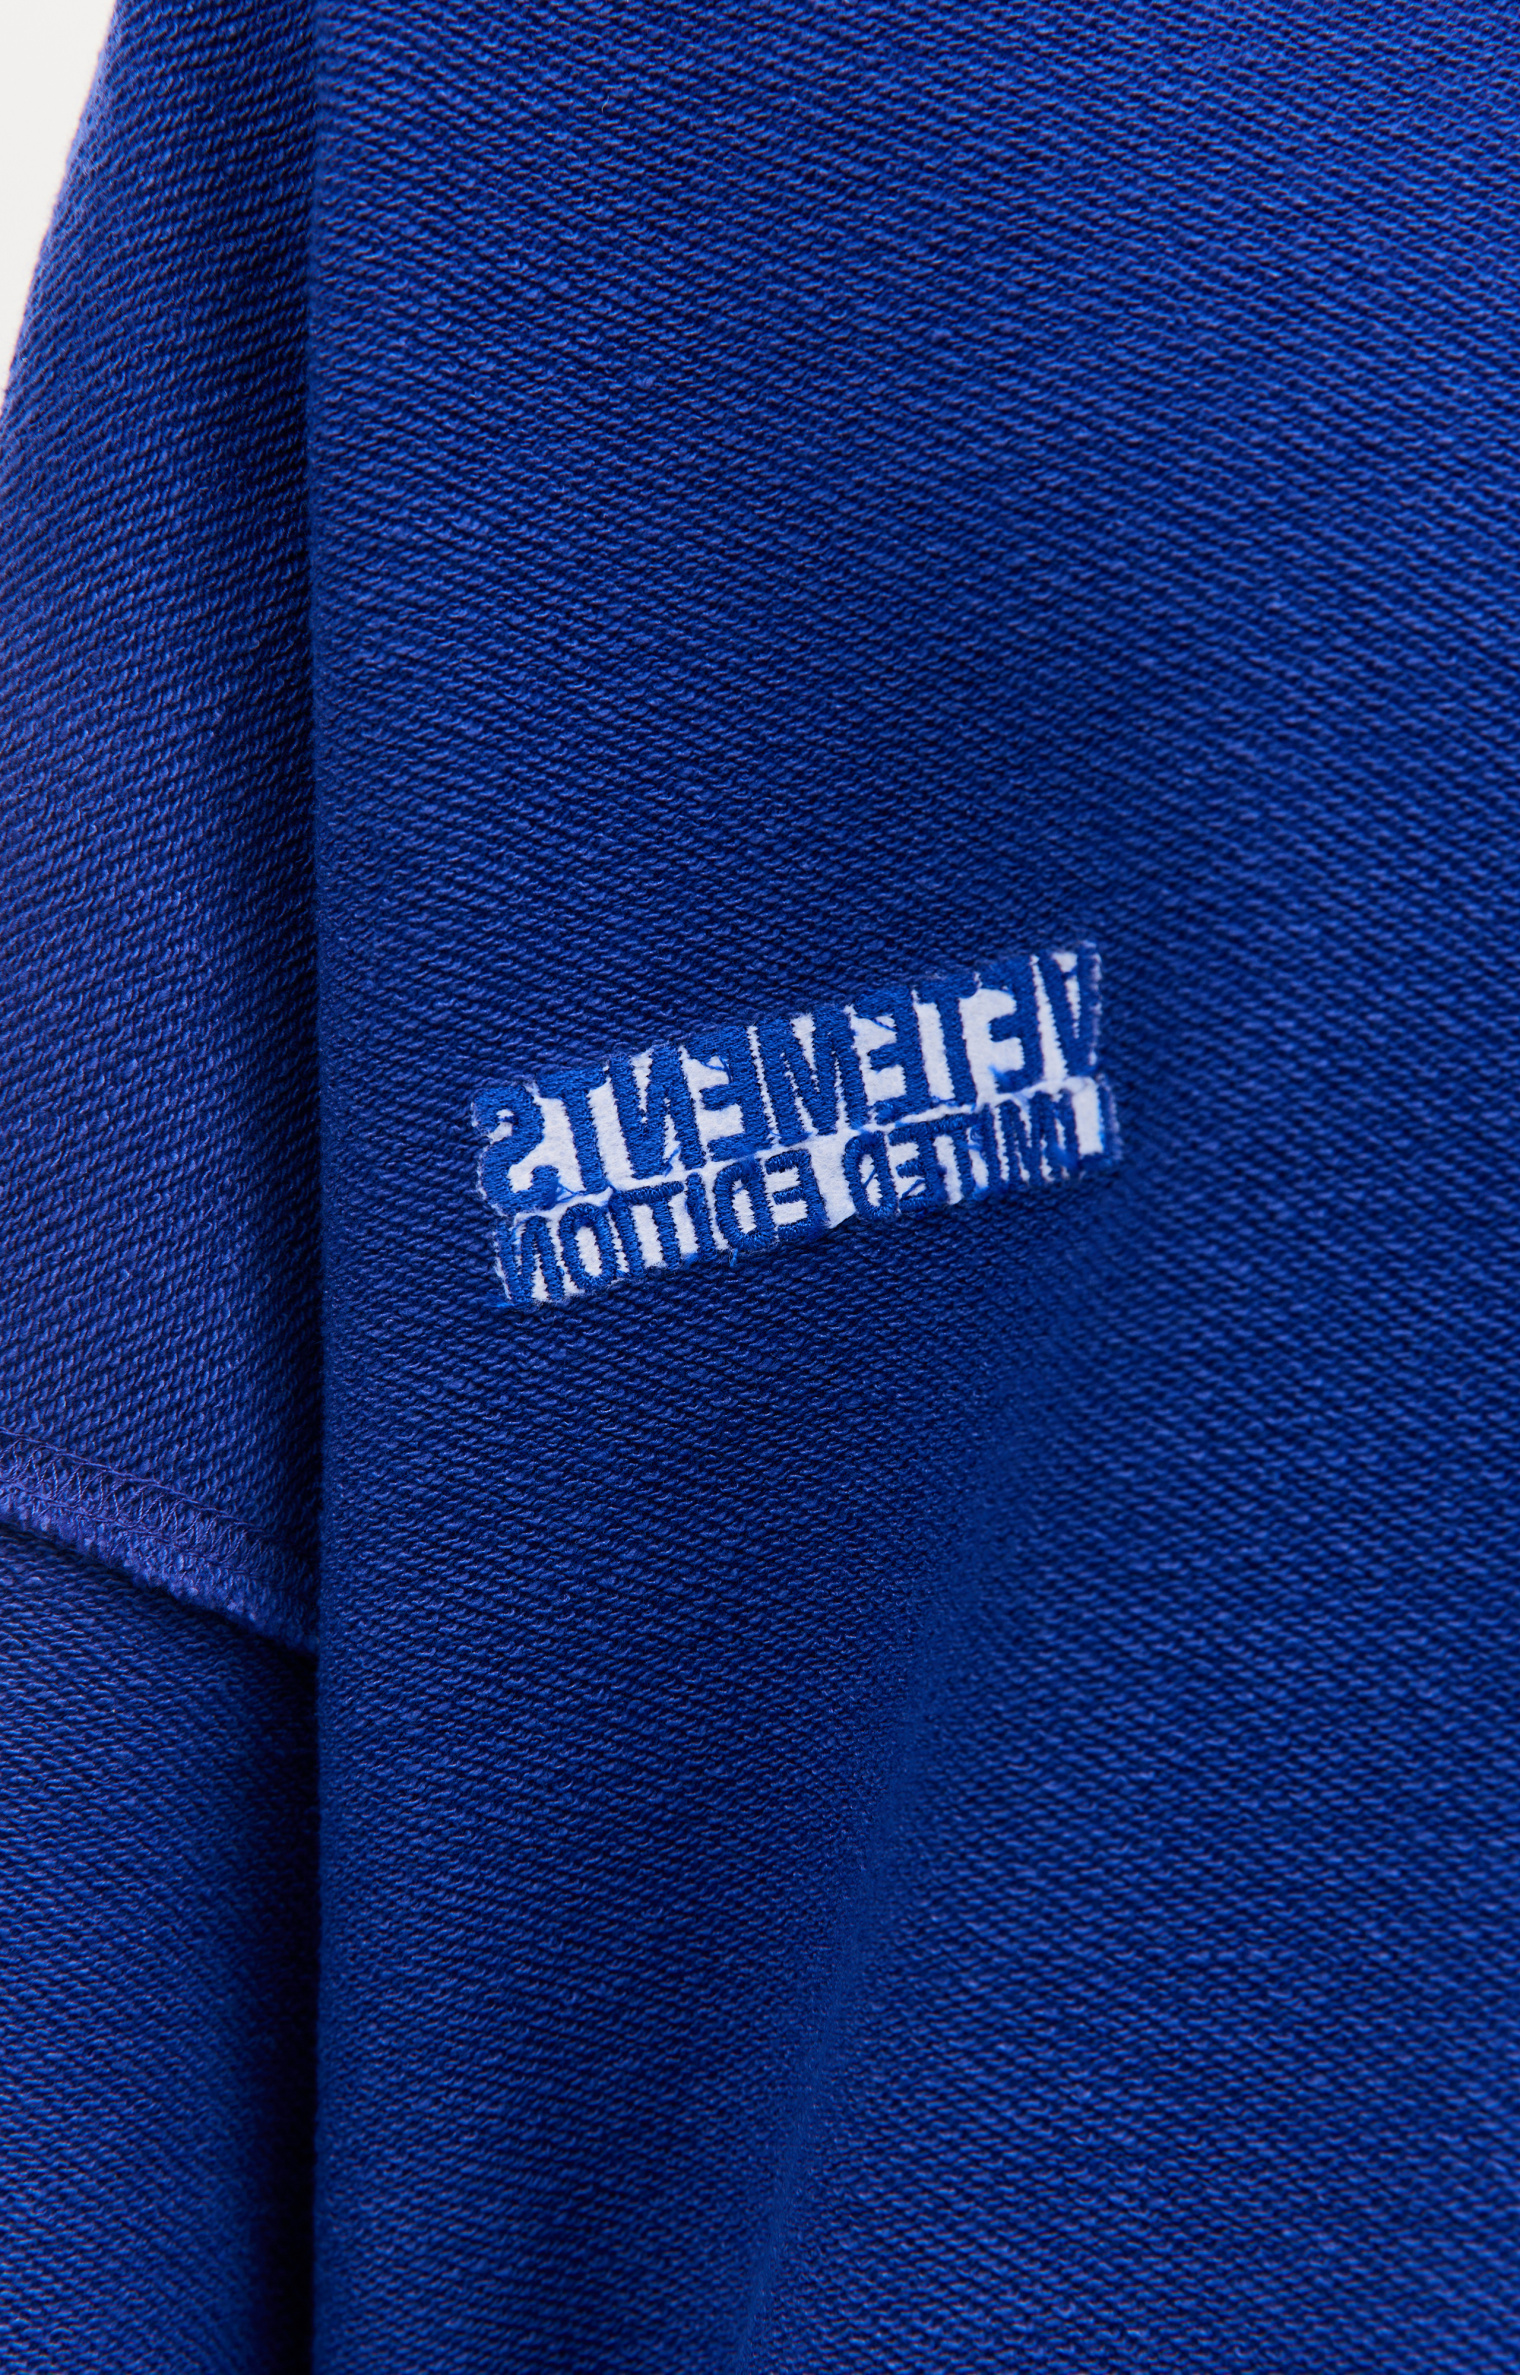 Buy VETEMENTS men blue black inside-out hoodie for $534 online on